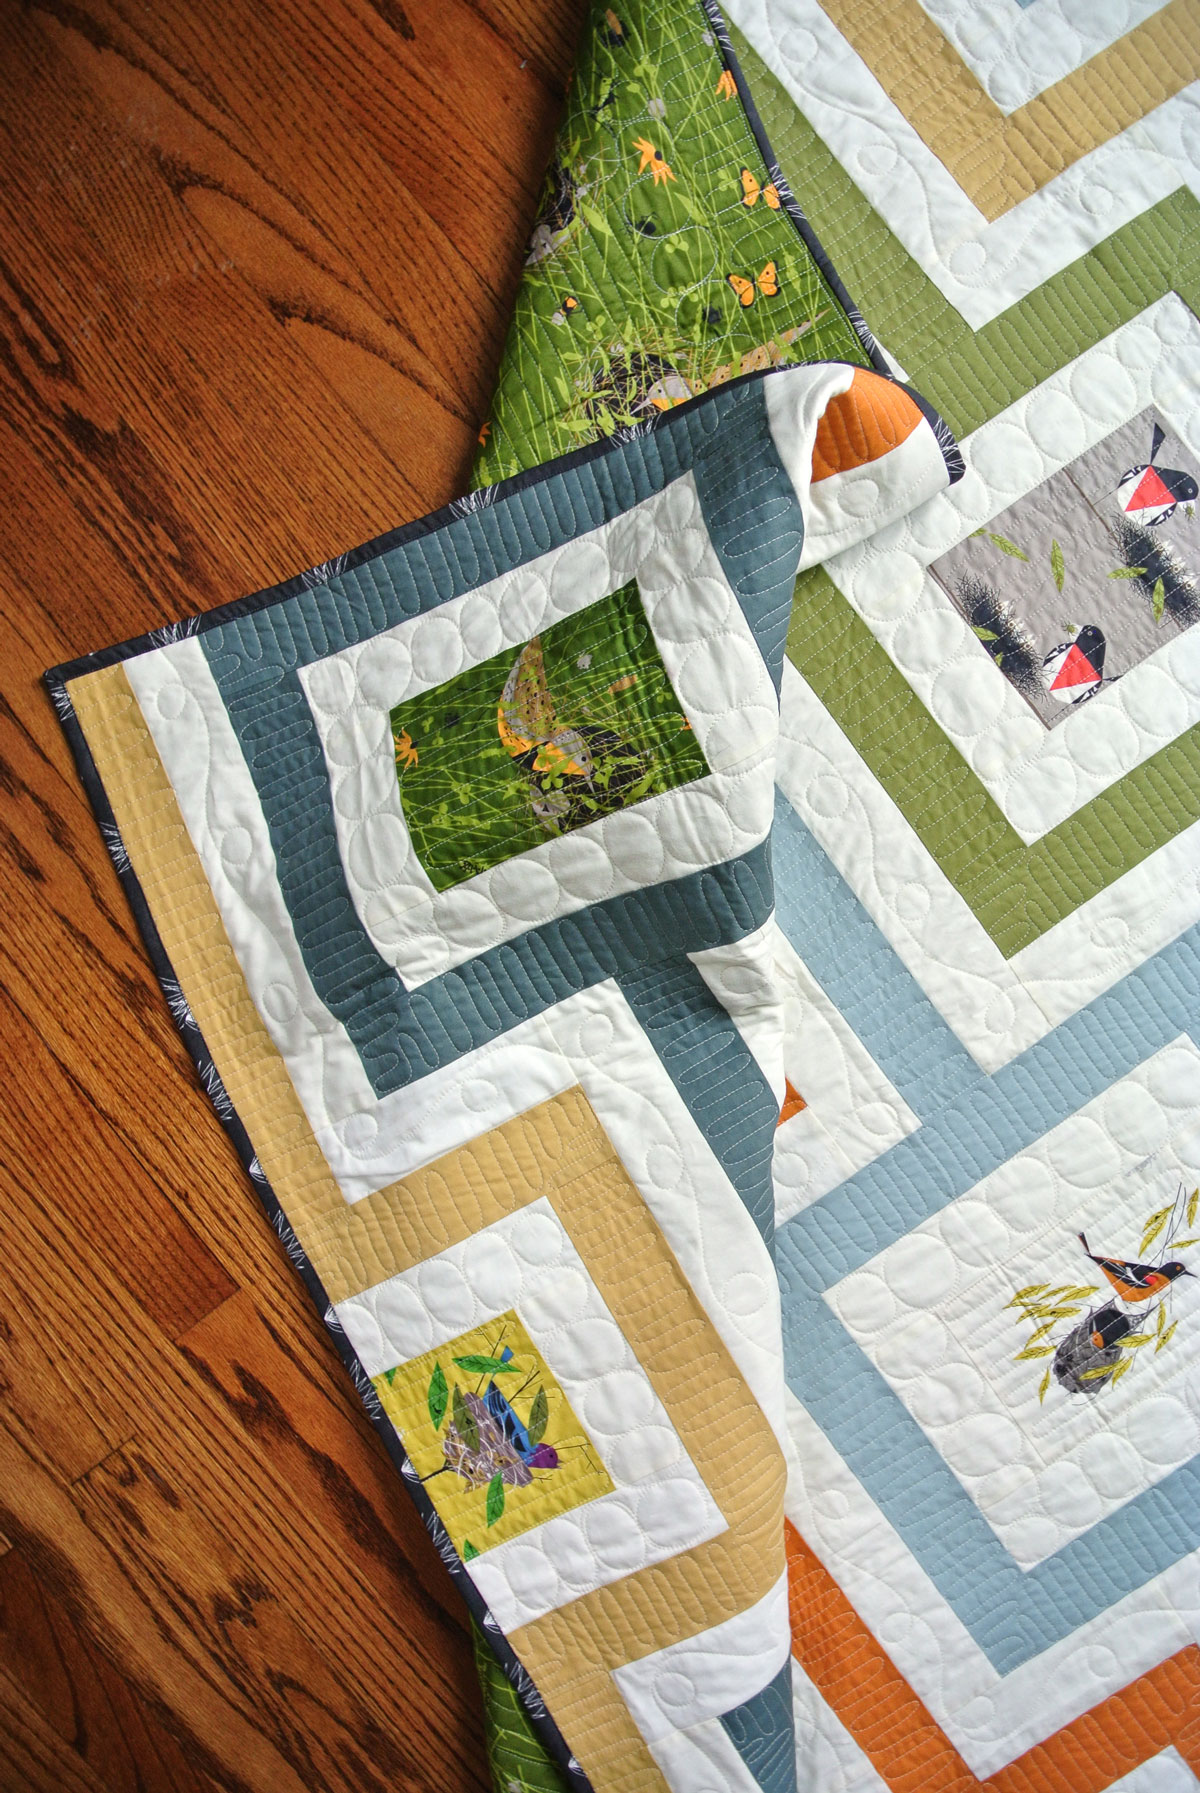 Free Quilt Pattern Download Cincinnati Quilt with Charley Harper Birds Fabric Design | Suzy Quilts https://suzyquilts.com/free-cincinnati-quilt-pattern/